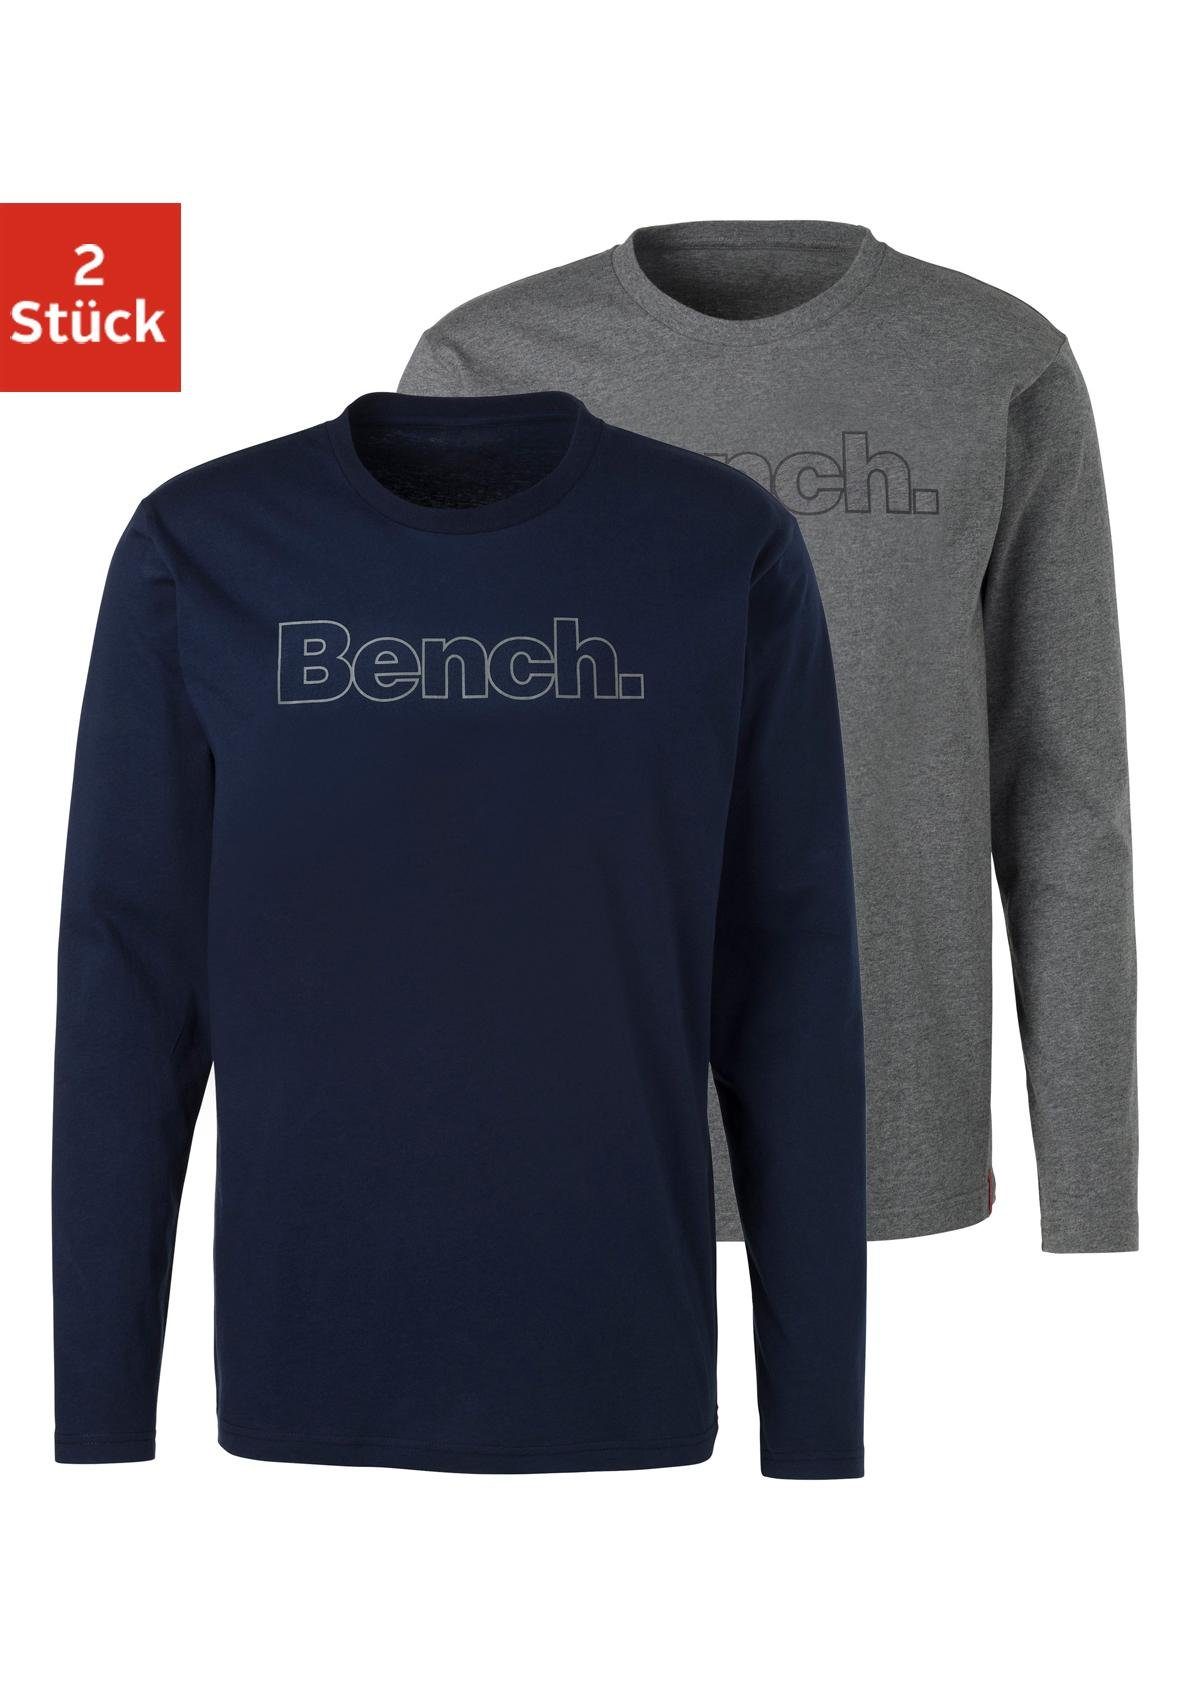 Bench. Loungewear Langarmshirt (2-tlg) mit Bench. Print vorn navy, grau-meliert